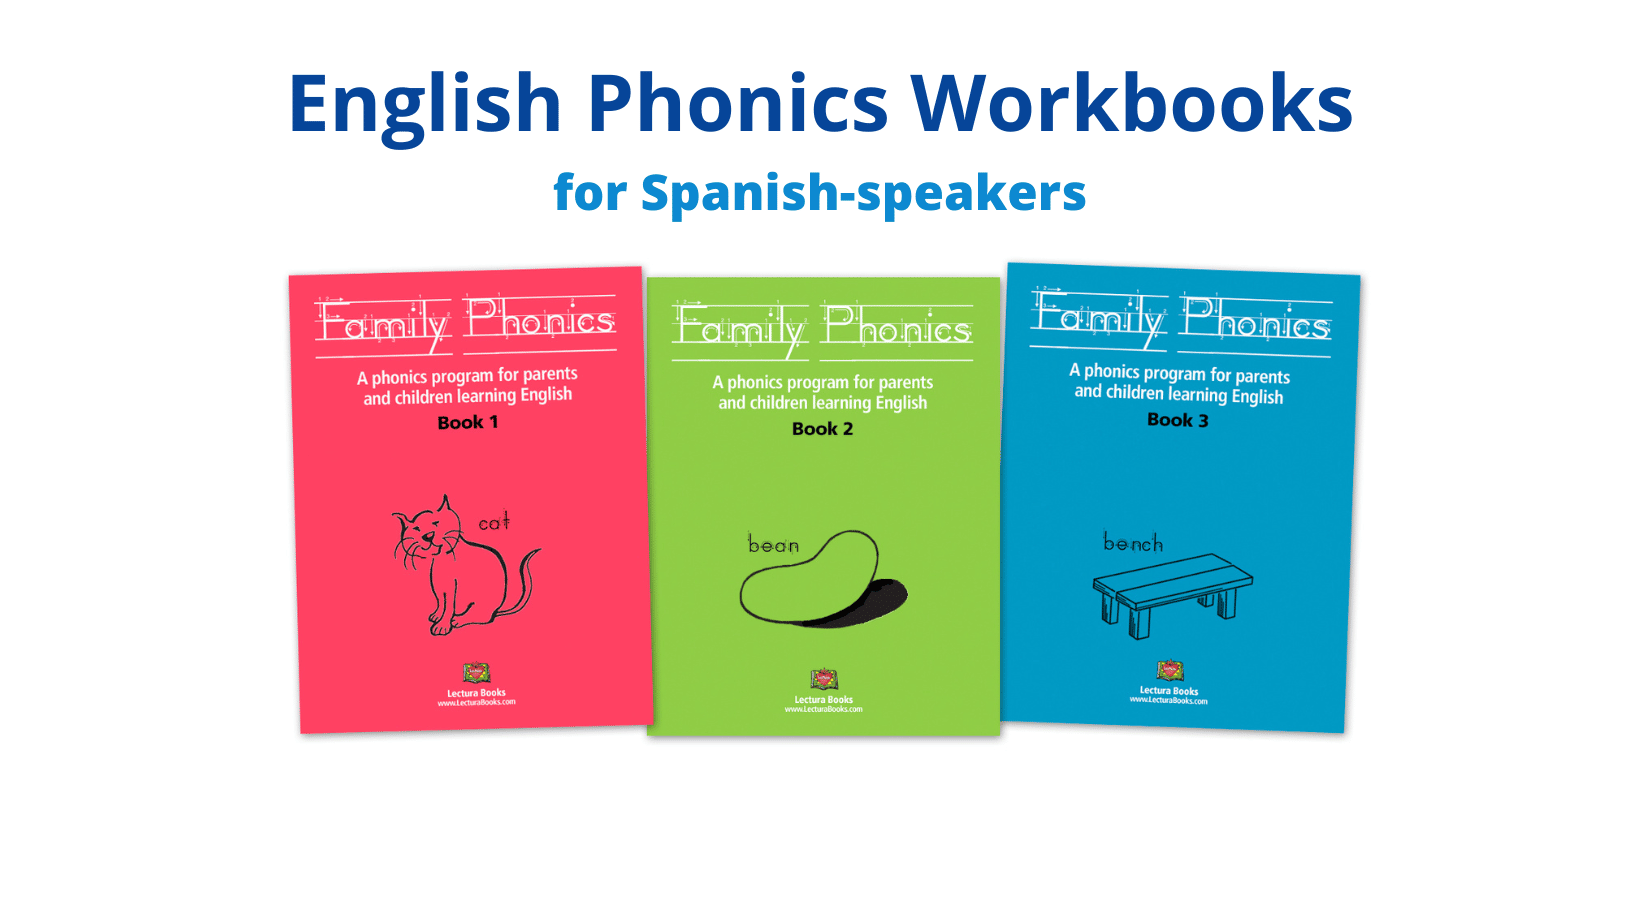 Workbooks to Teach Spanish-speaking Adults Basic English